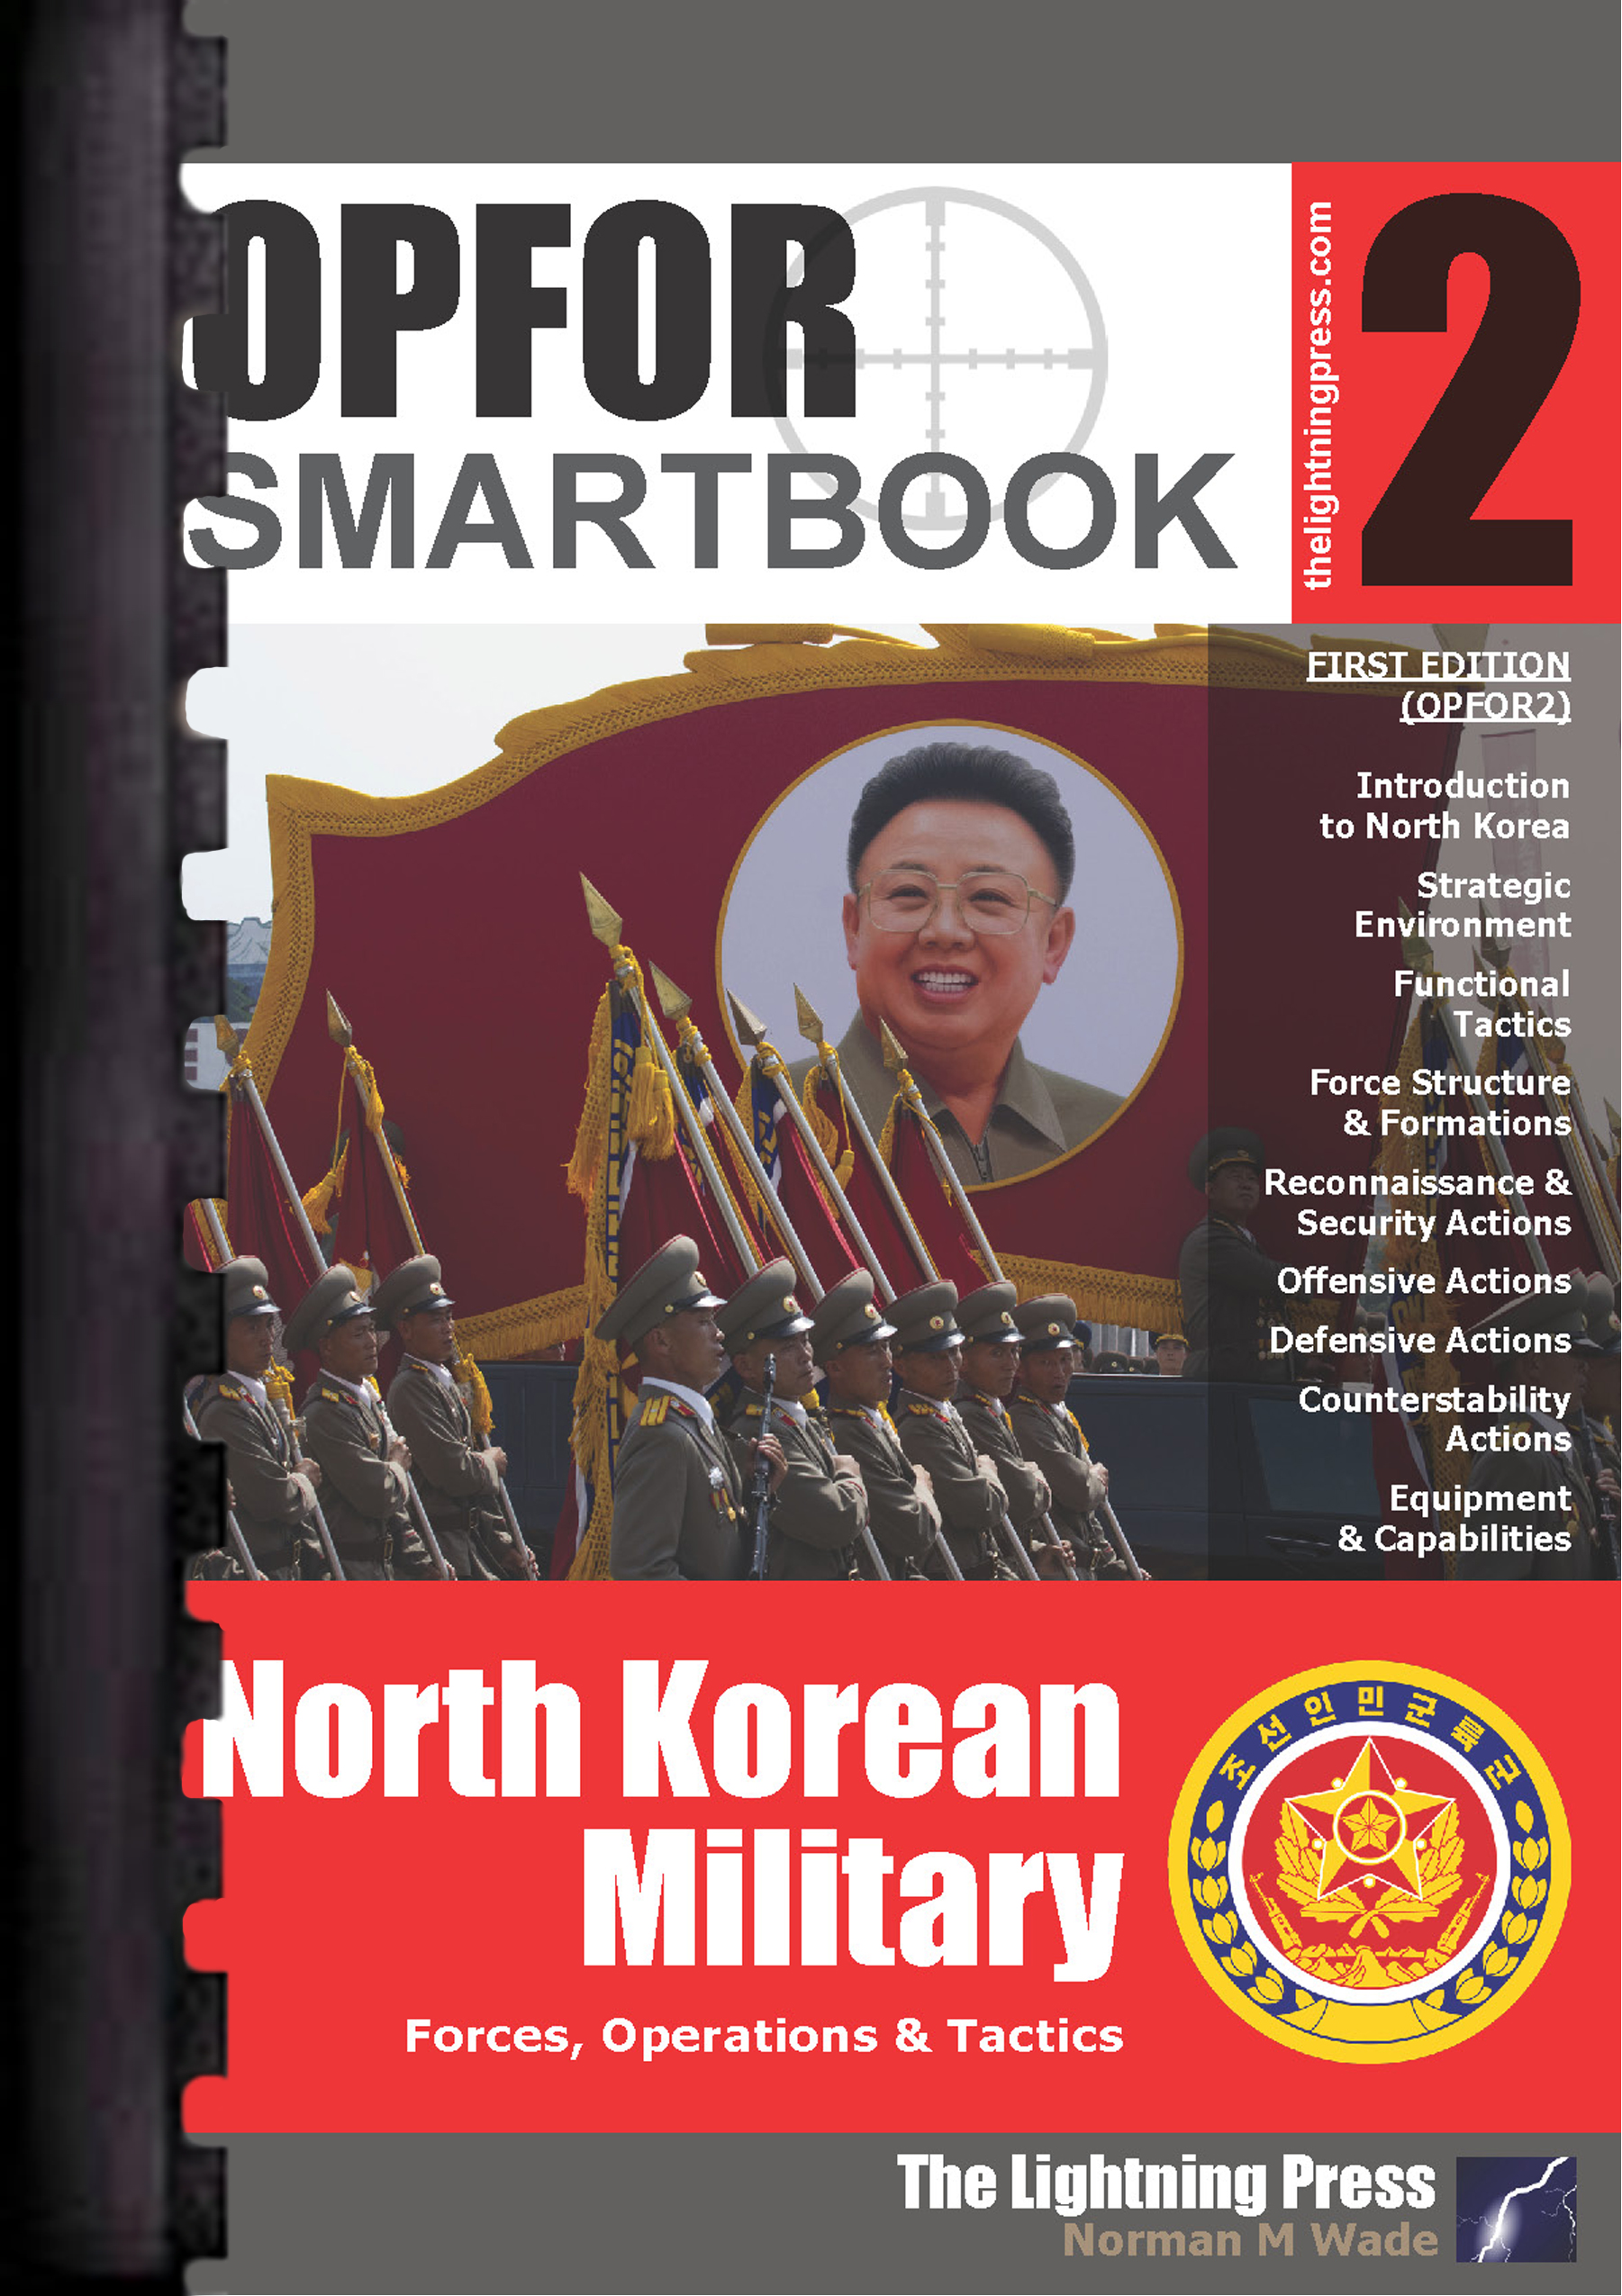 OPFOR SMARTbook 2 -  North Korean Military